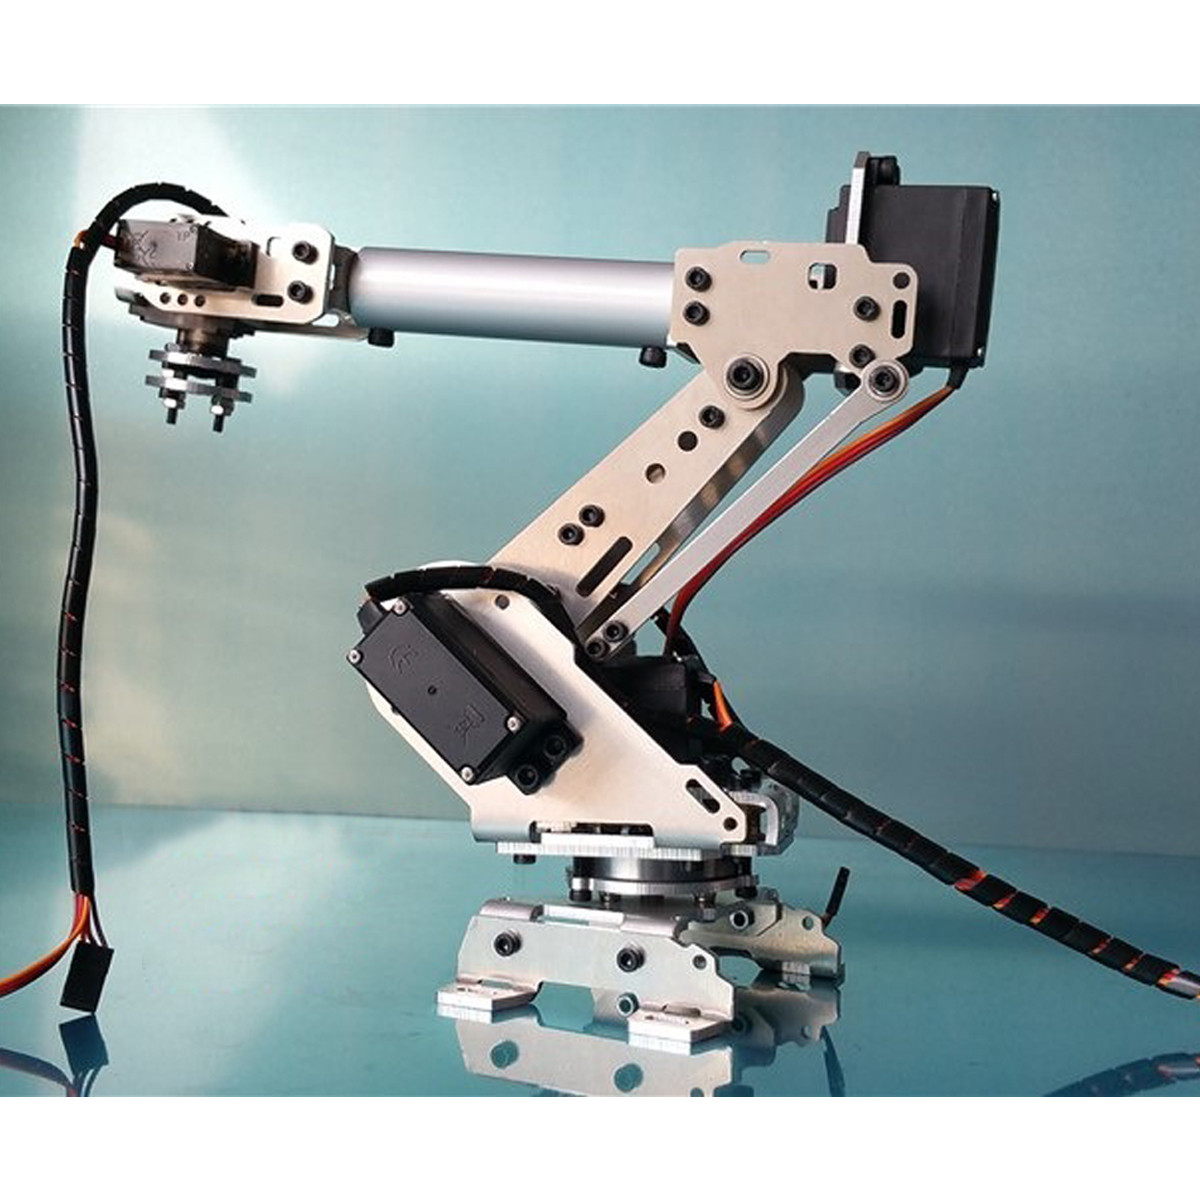 6DOF Mechanical Robot Arm Claw With Servos For Robotics Arduino DIY Kit 9